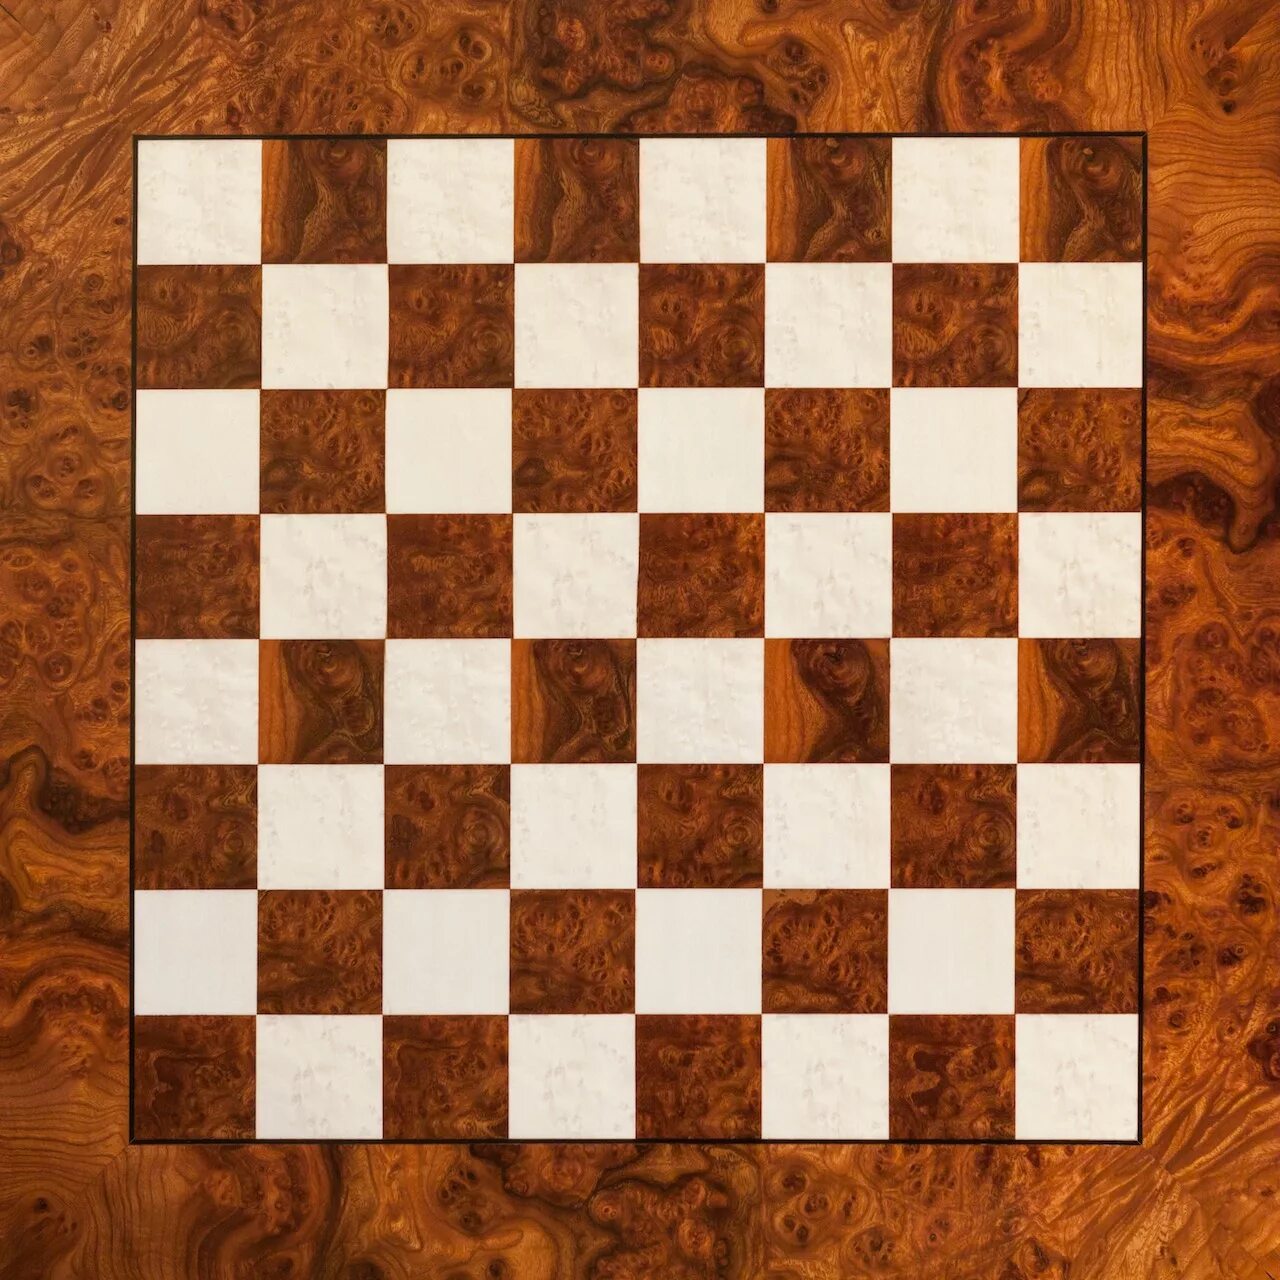 Chessboard. Поле Шахматов. Доска Шахматов. Шахматная доска текстура. Шахматная доска коричневая.